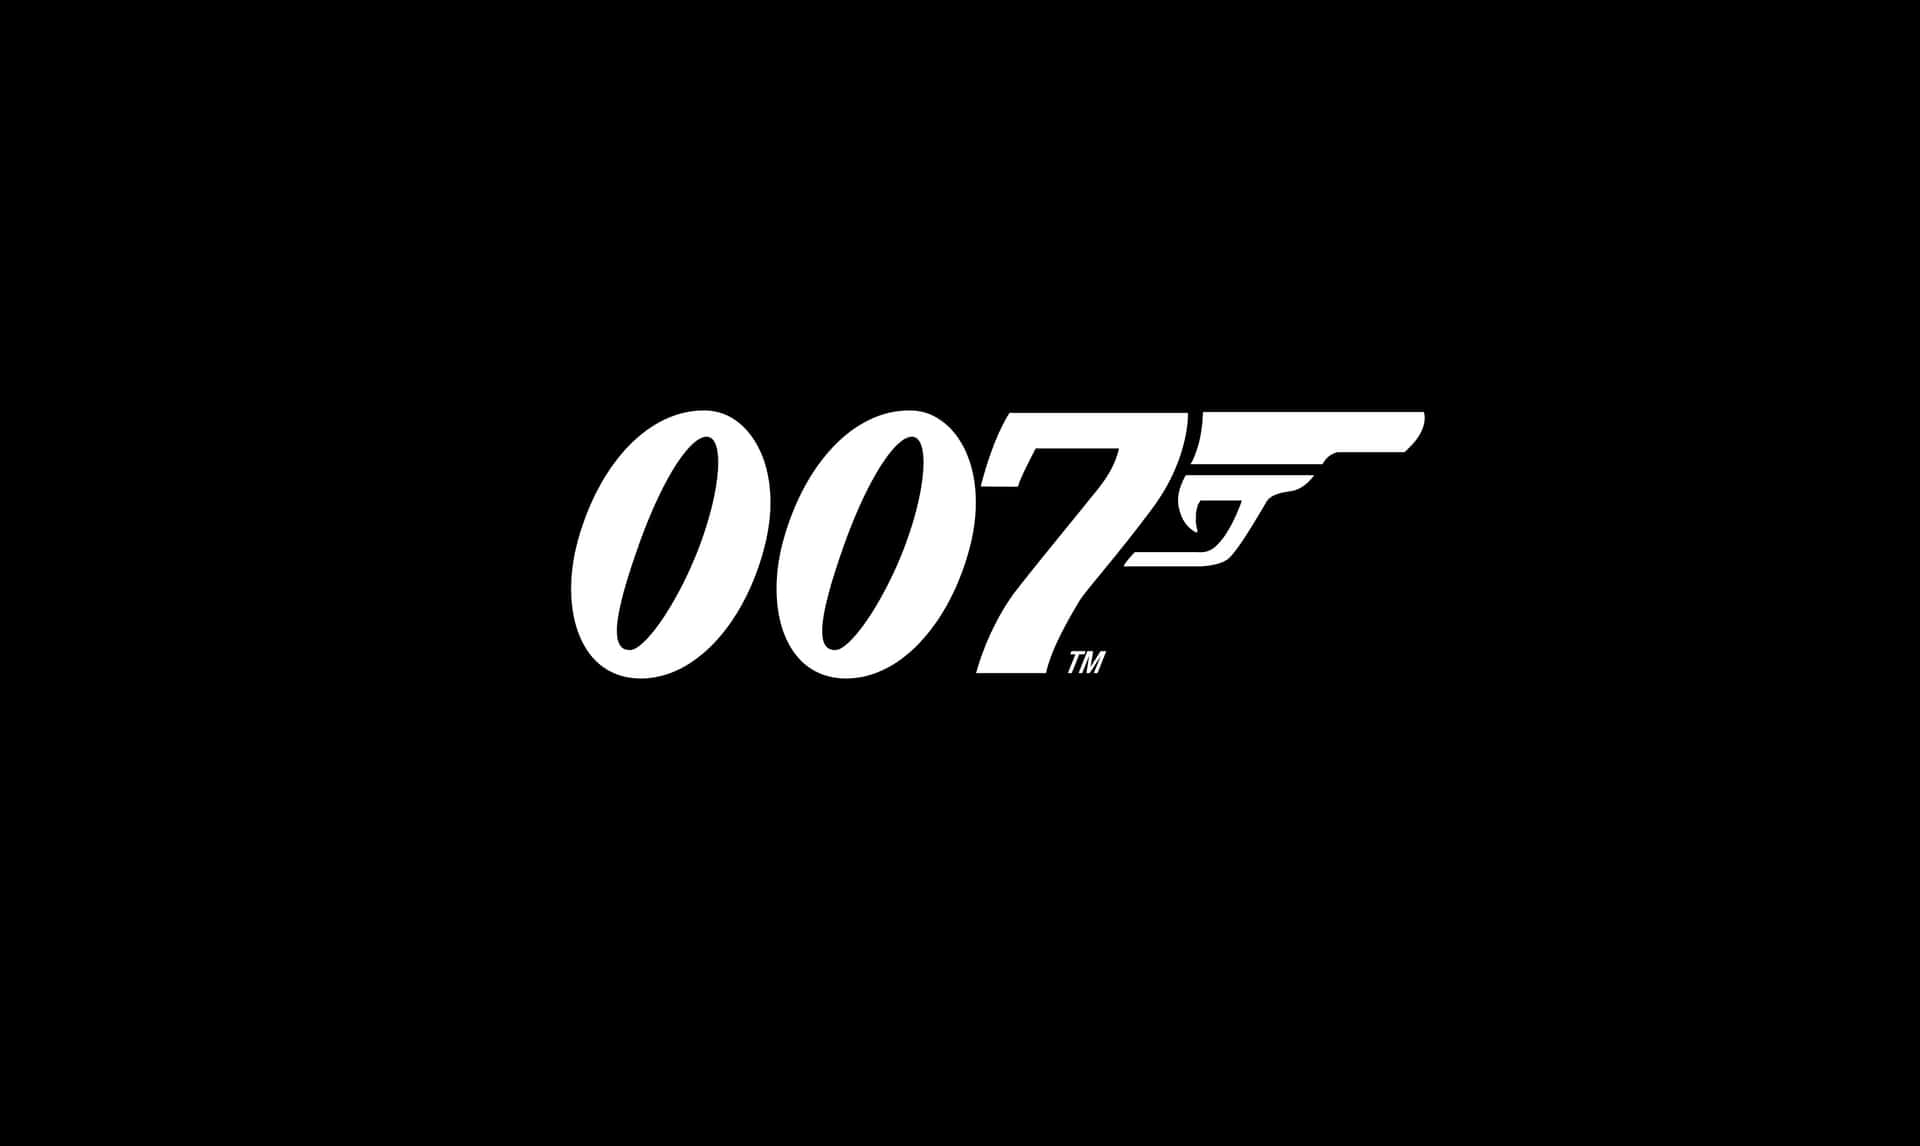 James Bond007 Logo Black Background Wallpaper